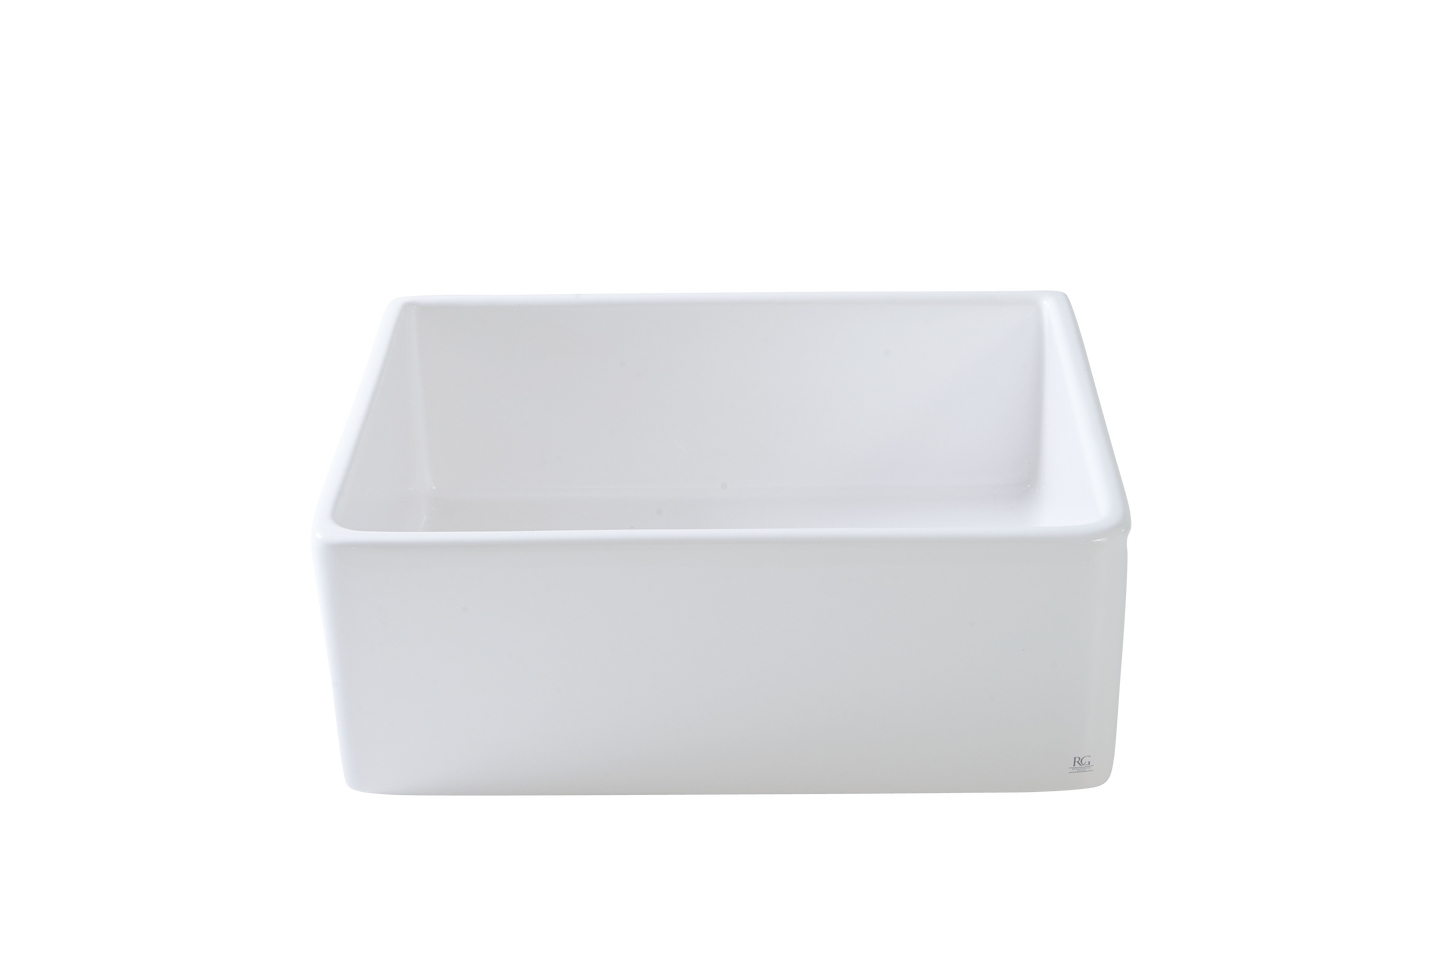 Butler Sink - Small 595 x 475 x 220mm - 595